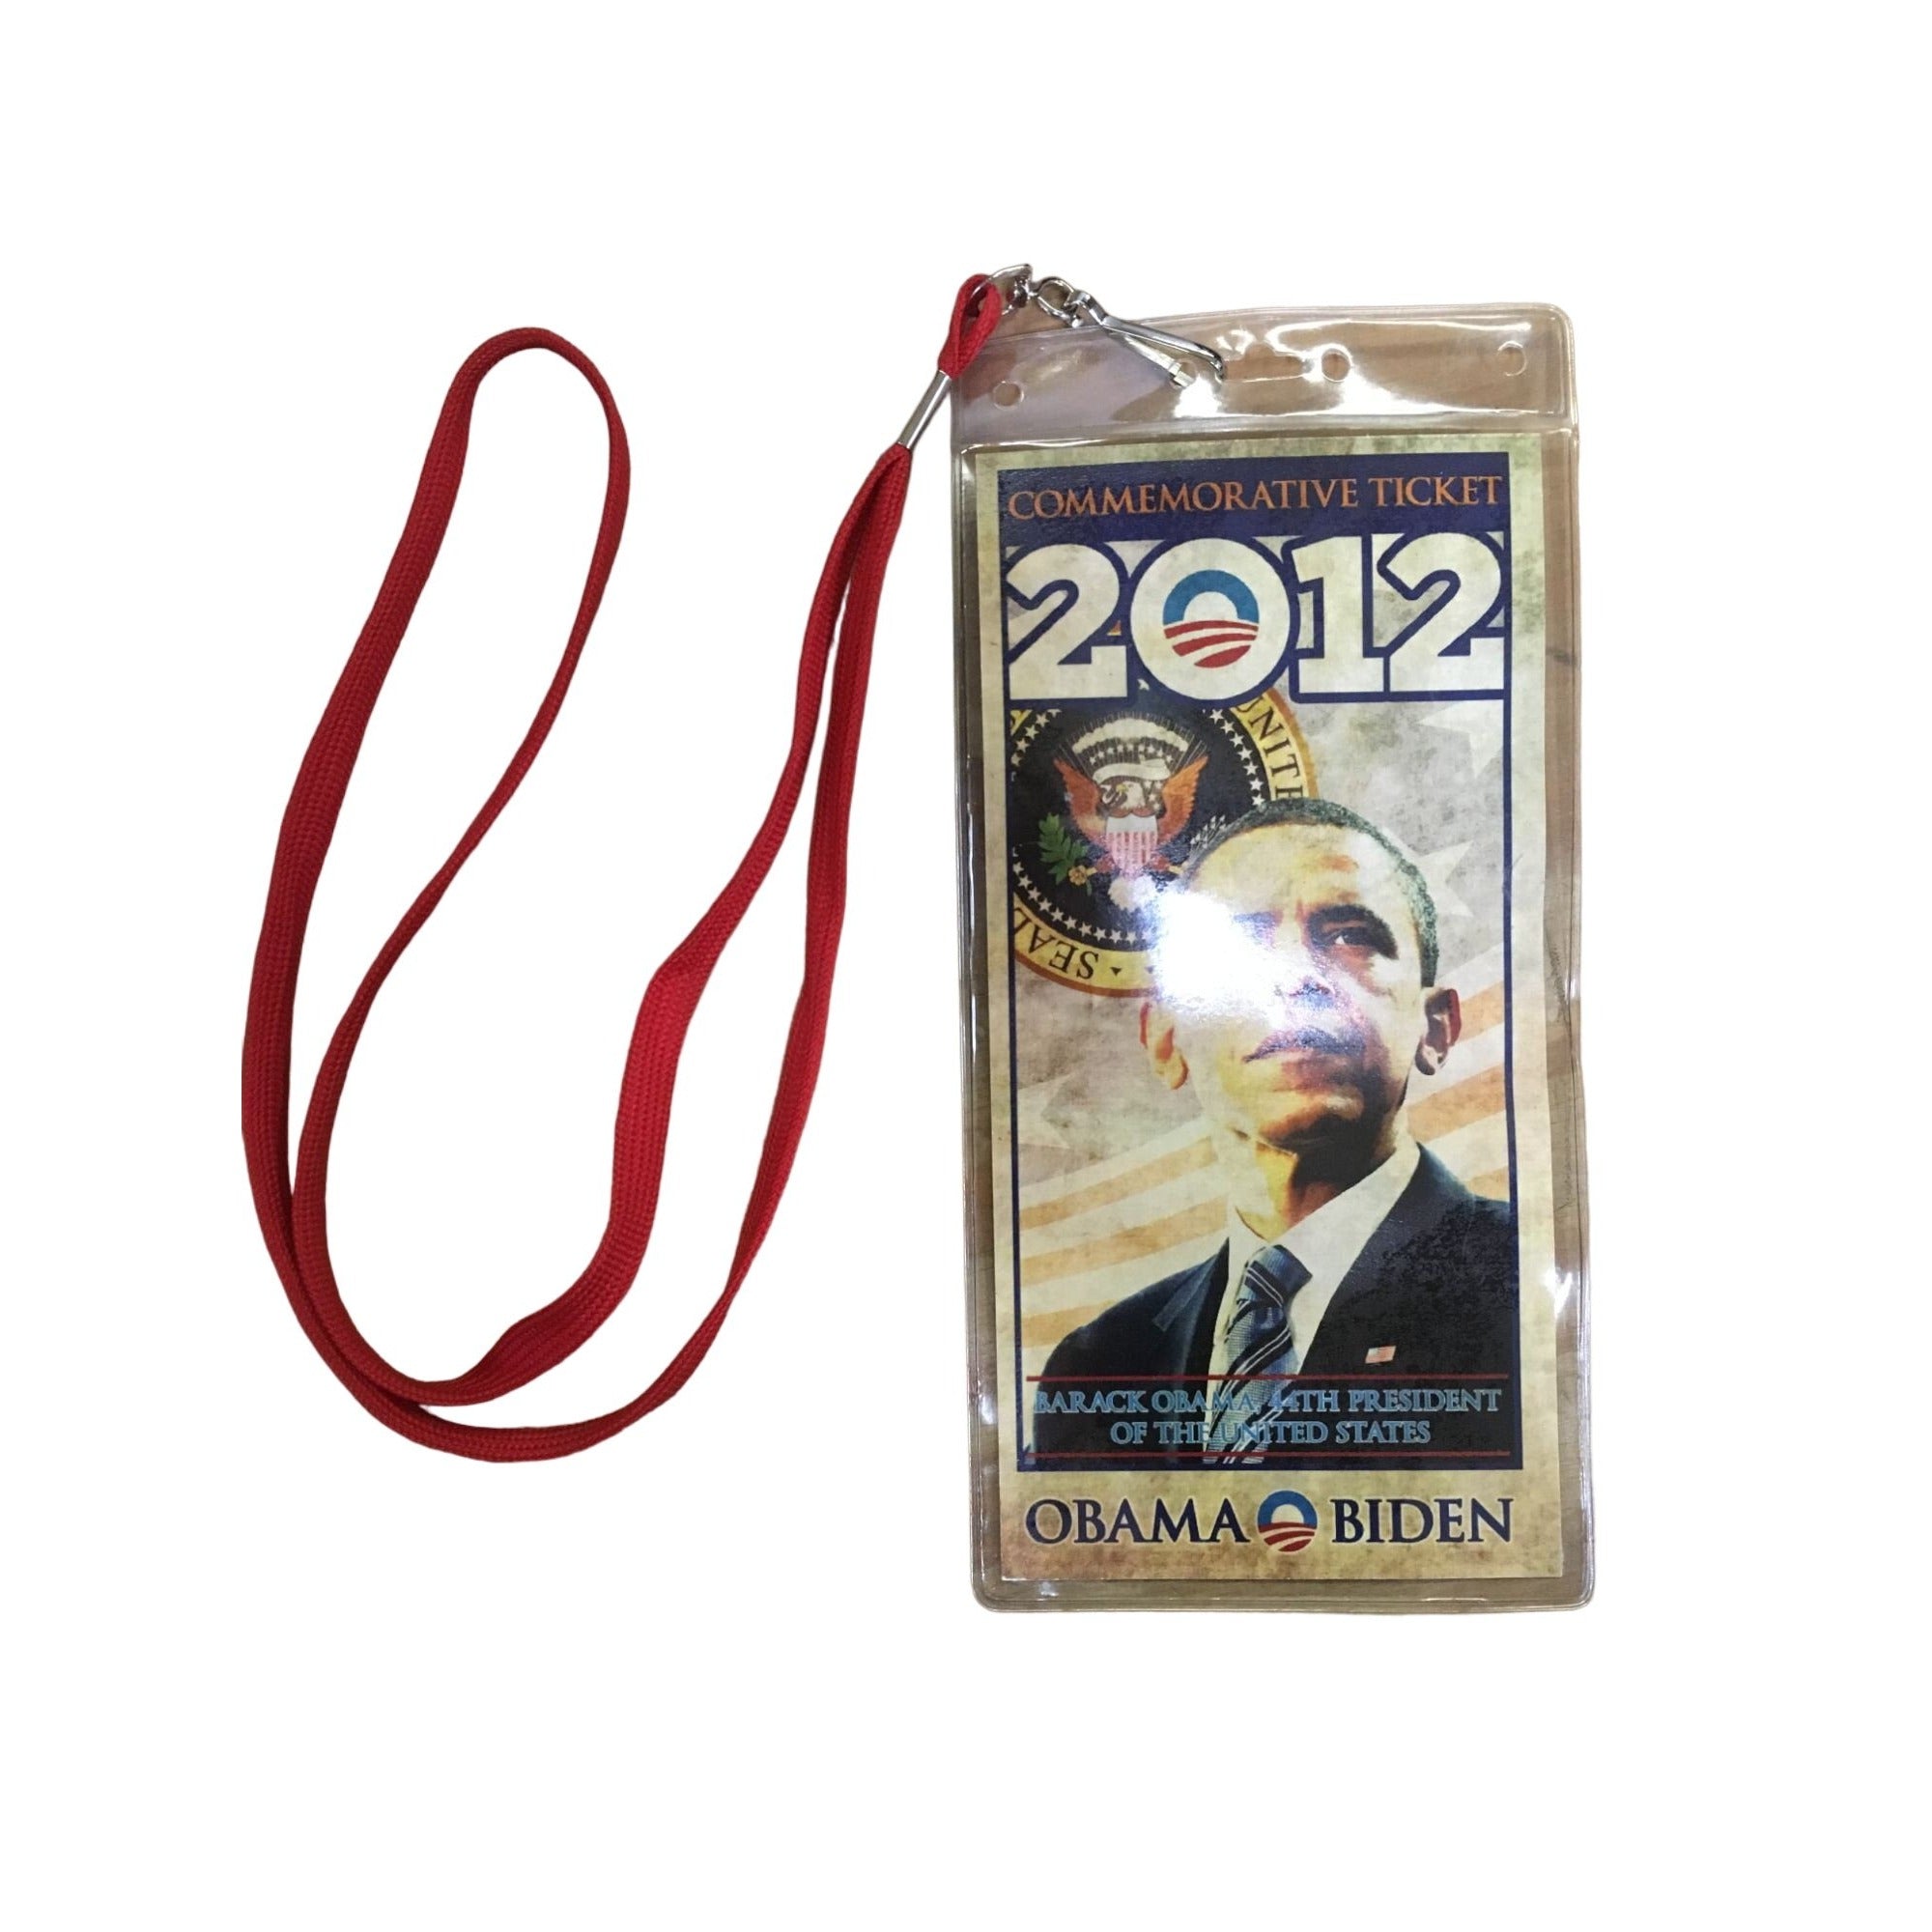 Barack Obama 44th President of the U.S.- 2012 Commemorative Ticket